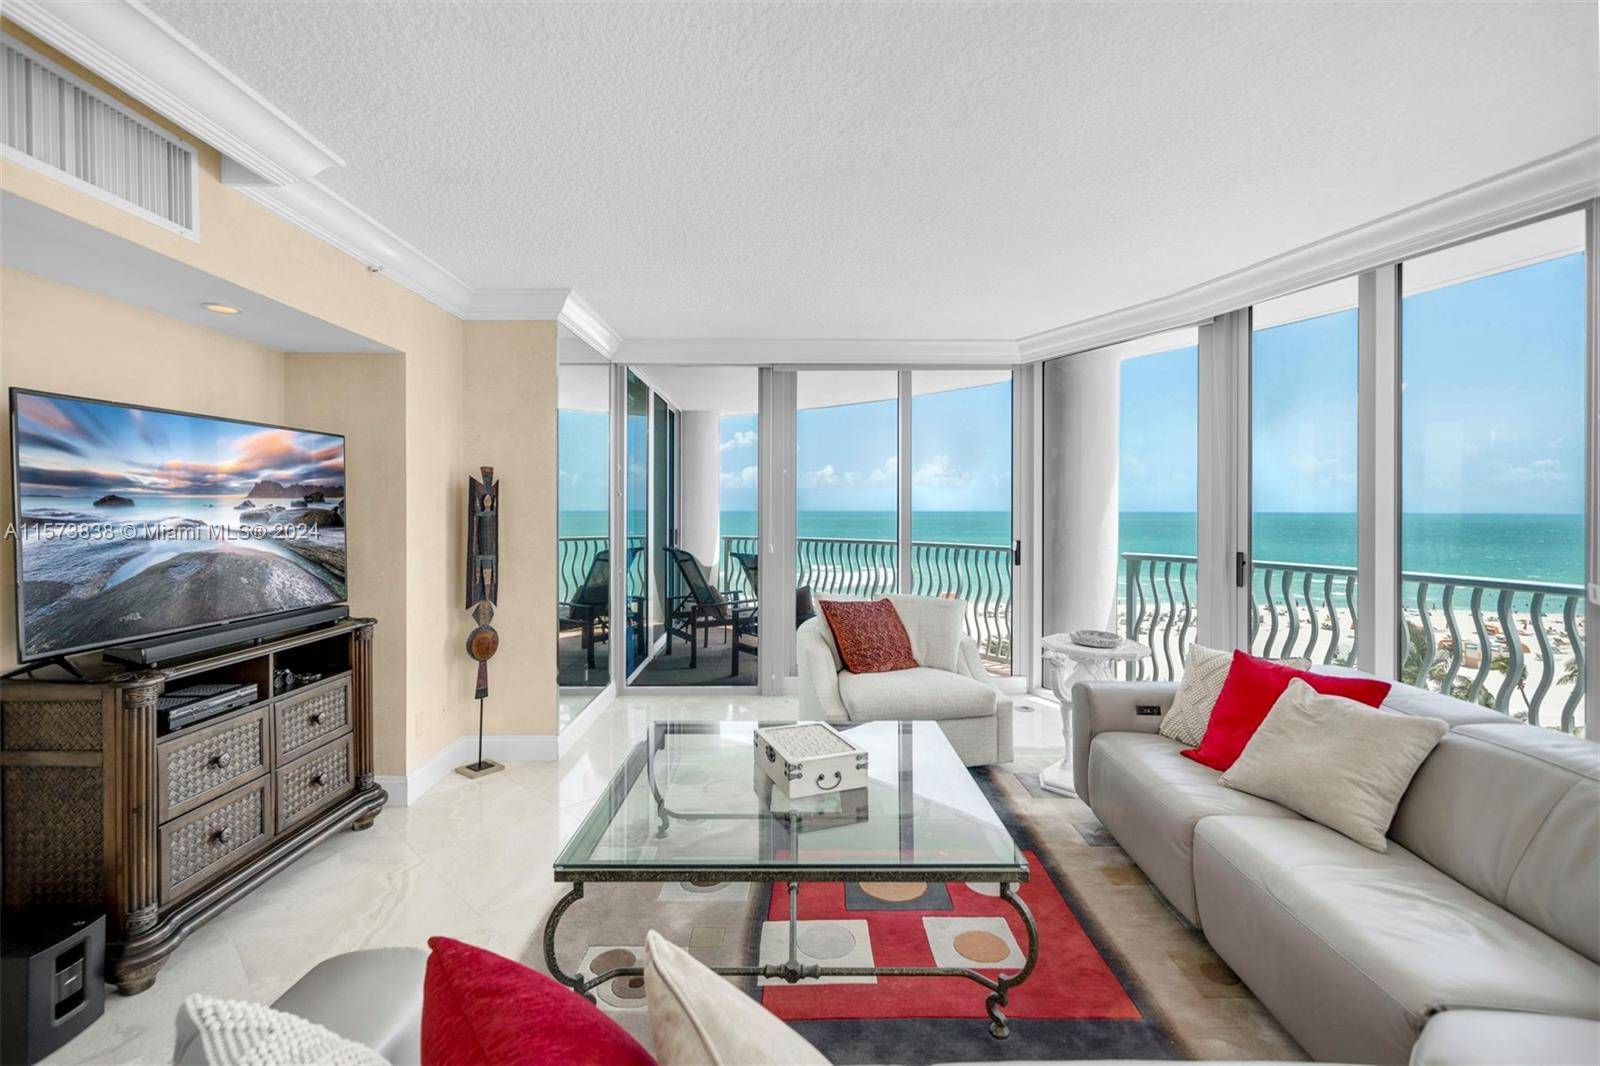 Enjoy gorgeous views of the Atlantic Ocean in this SE corner 3 bedroom residence located at 1500 Ocean.